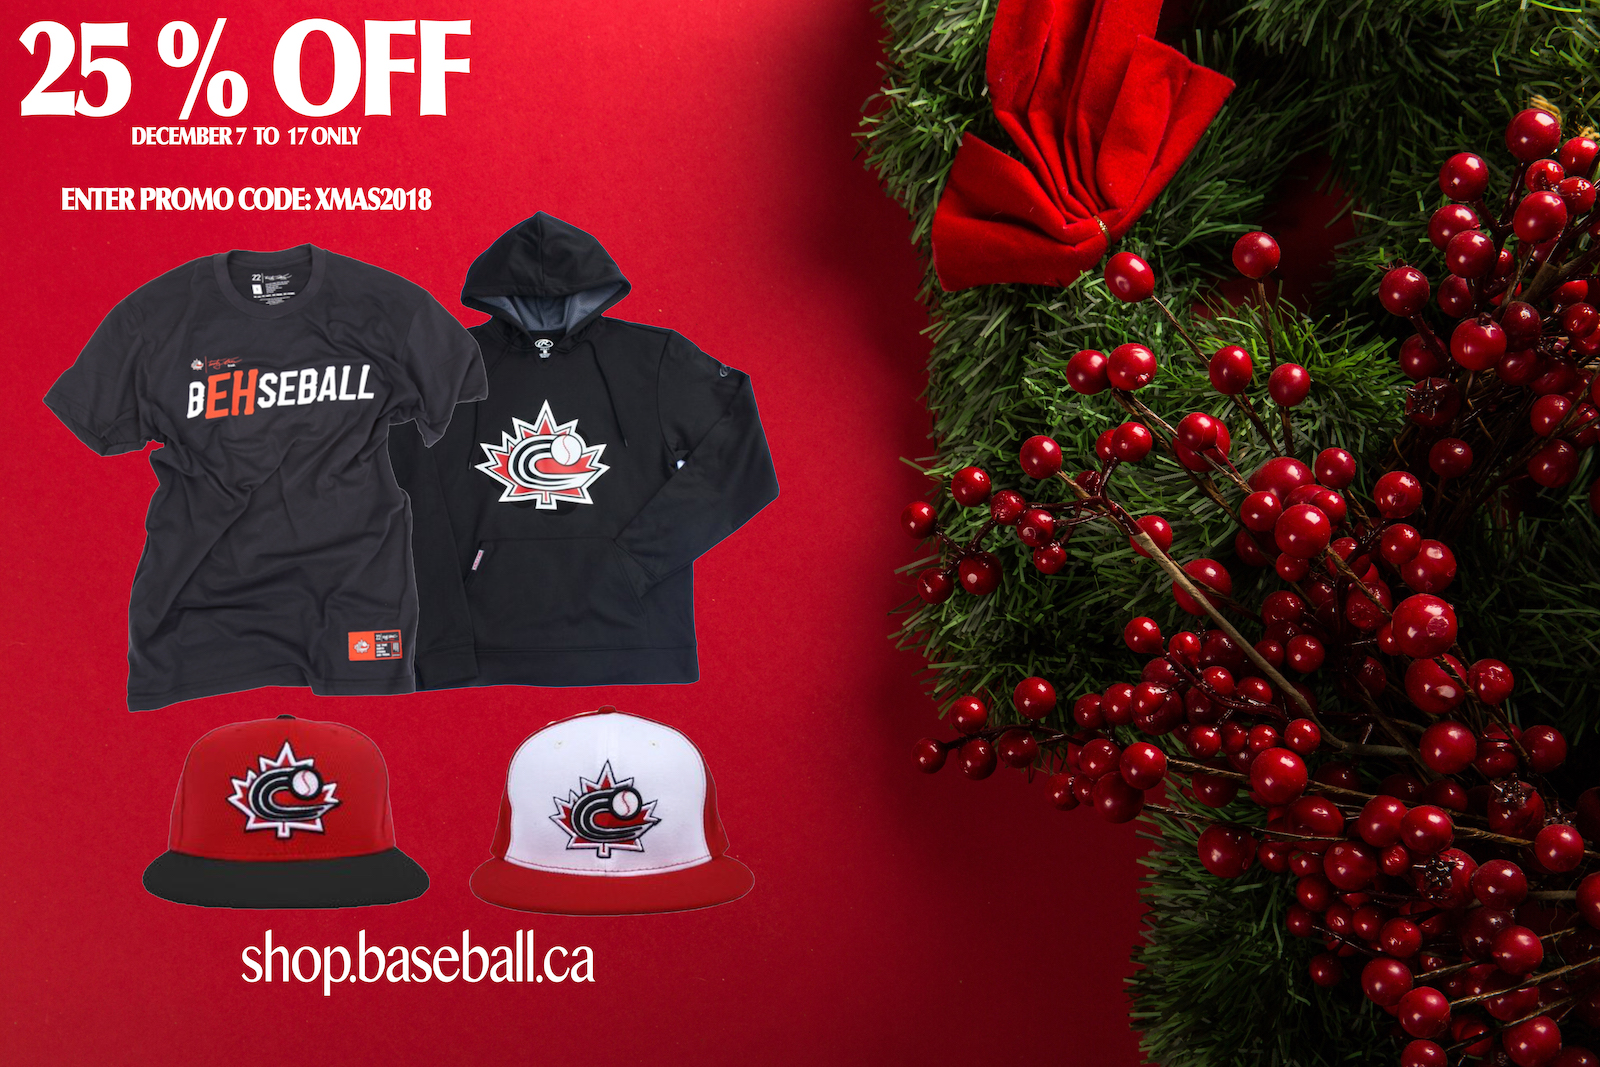 Baseball Canada Merchandise now 25% off!